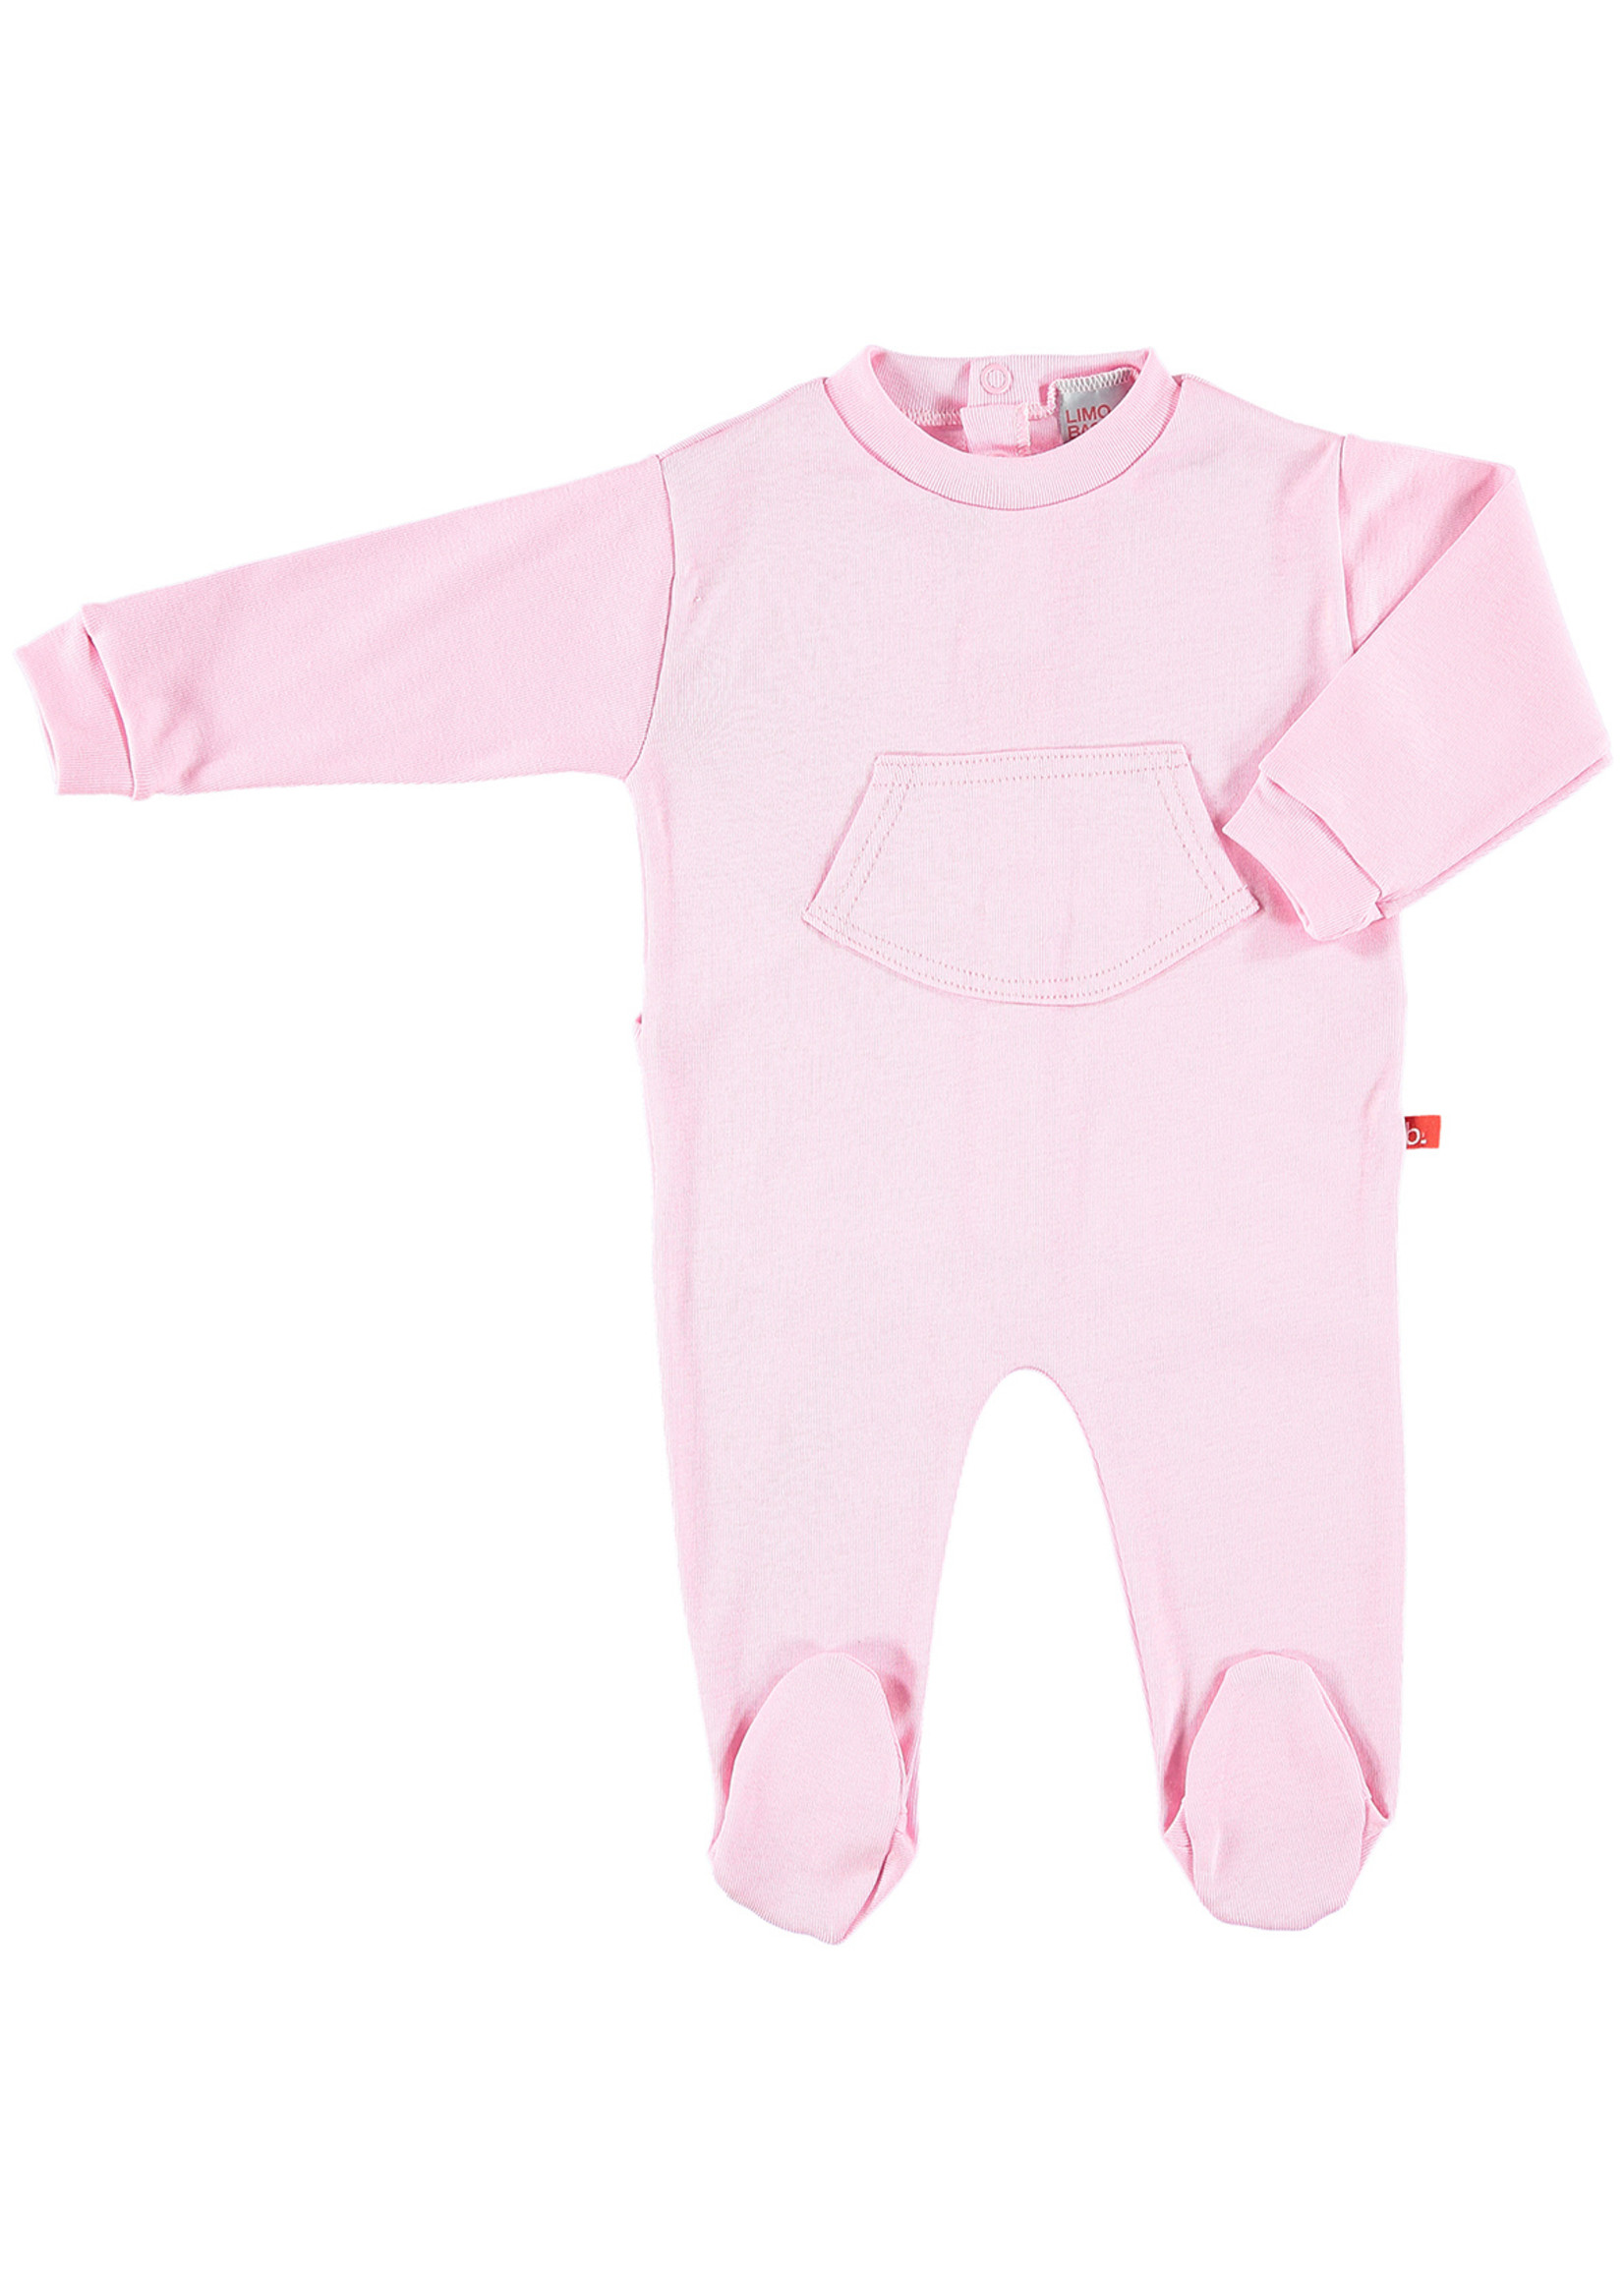 Limo basics Baby body / pyjama suit pink organic cotton